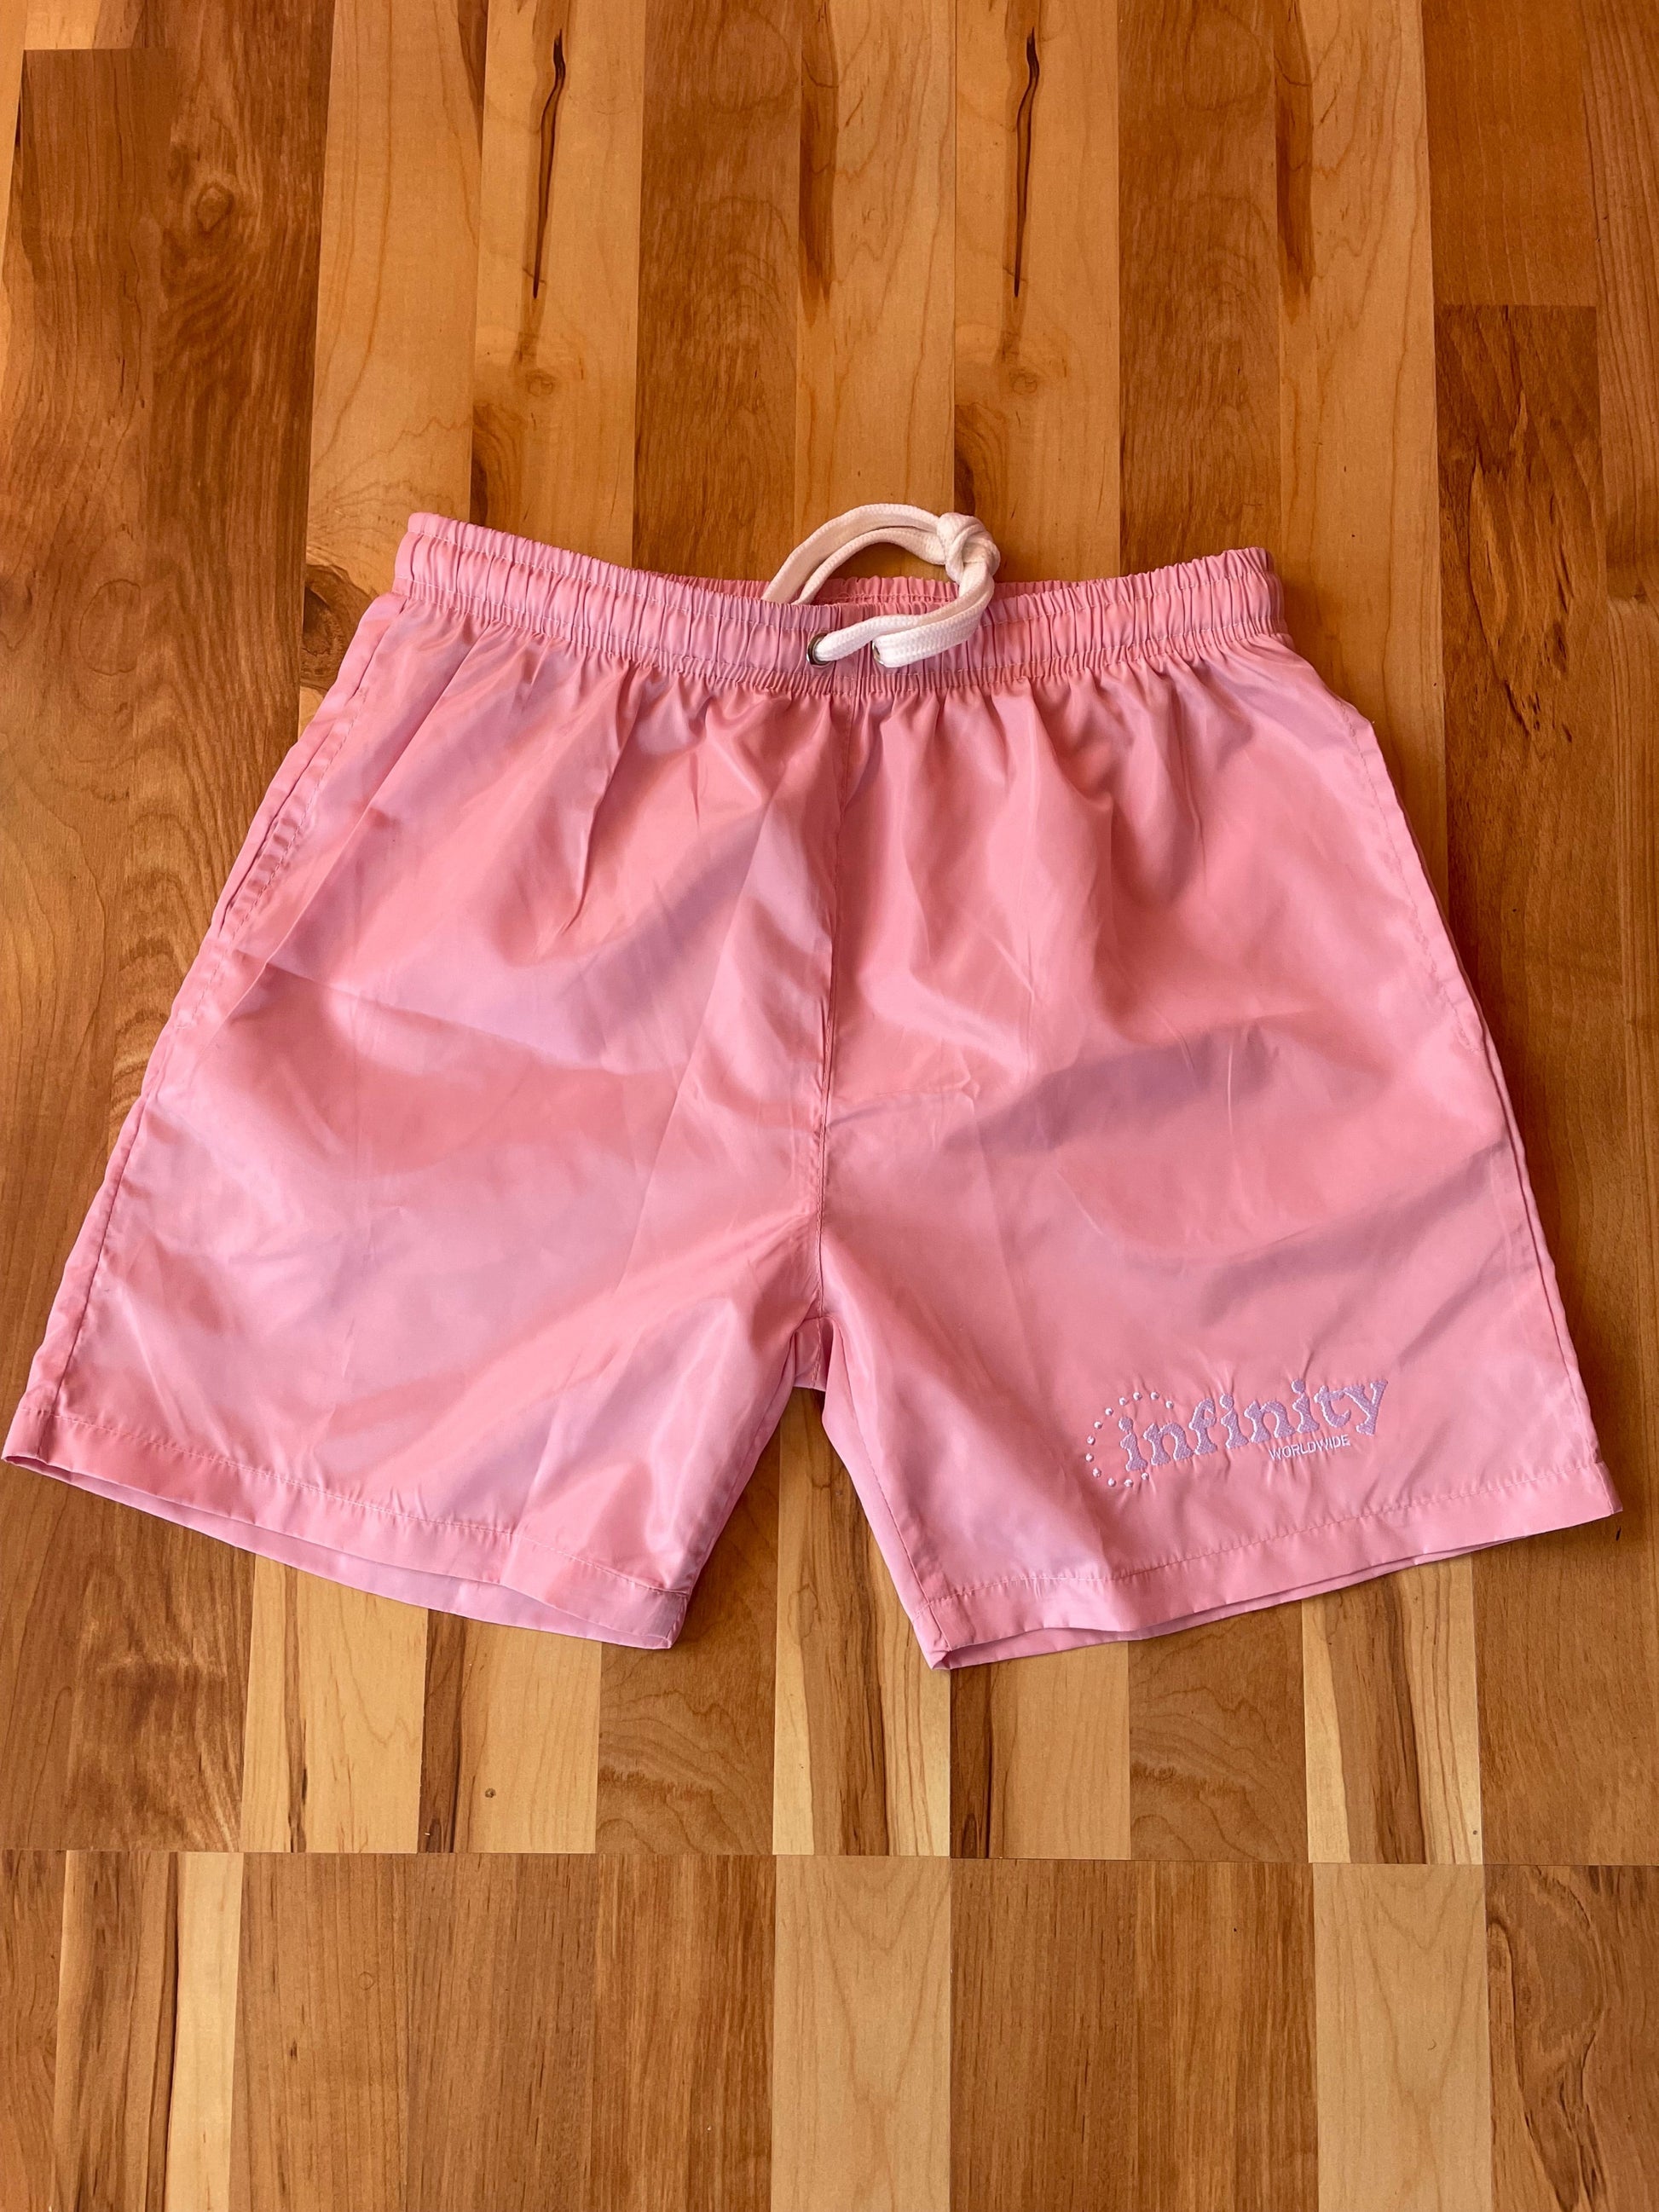 Nylon Shorts – InfinityWorldwide